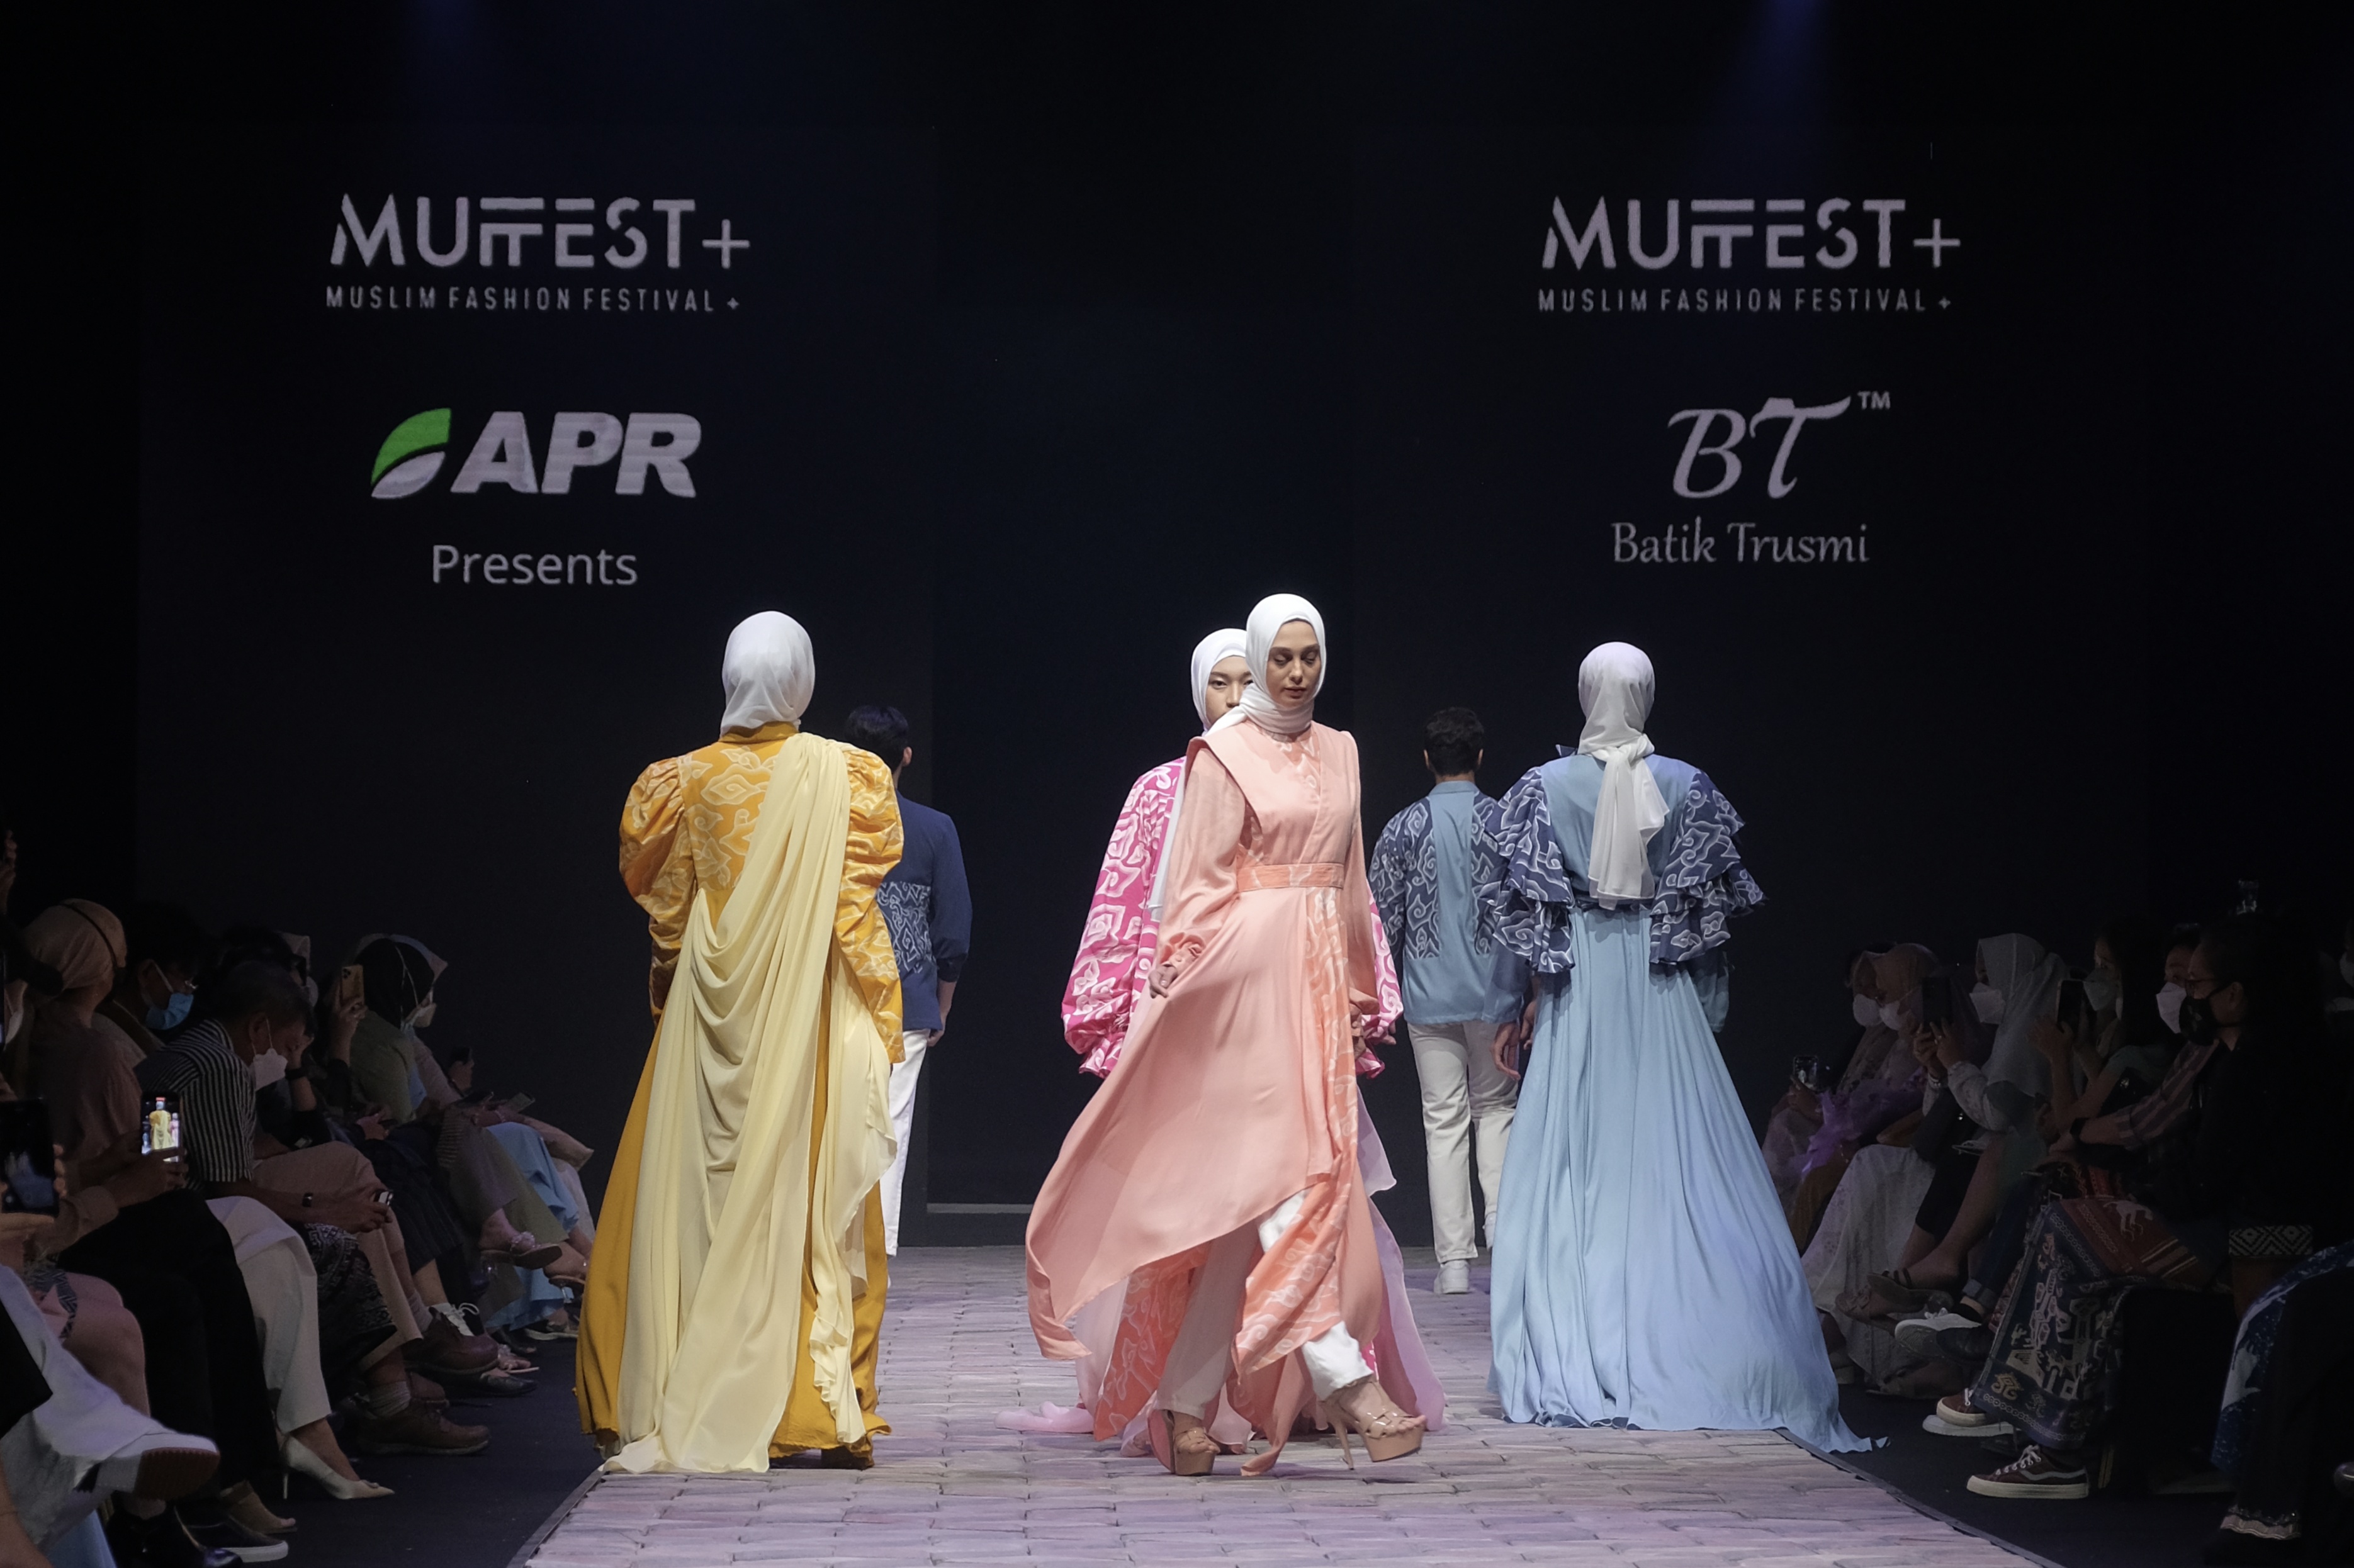 Koleksi UMKM BT Batik Trusmi dalam Sustainable Modest Fashion, Muslim Fashion Festival (MUFFEST+) 2022, Kamis (21/04/2022). (Sumber: MUFFEST+ 2022)